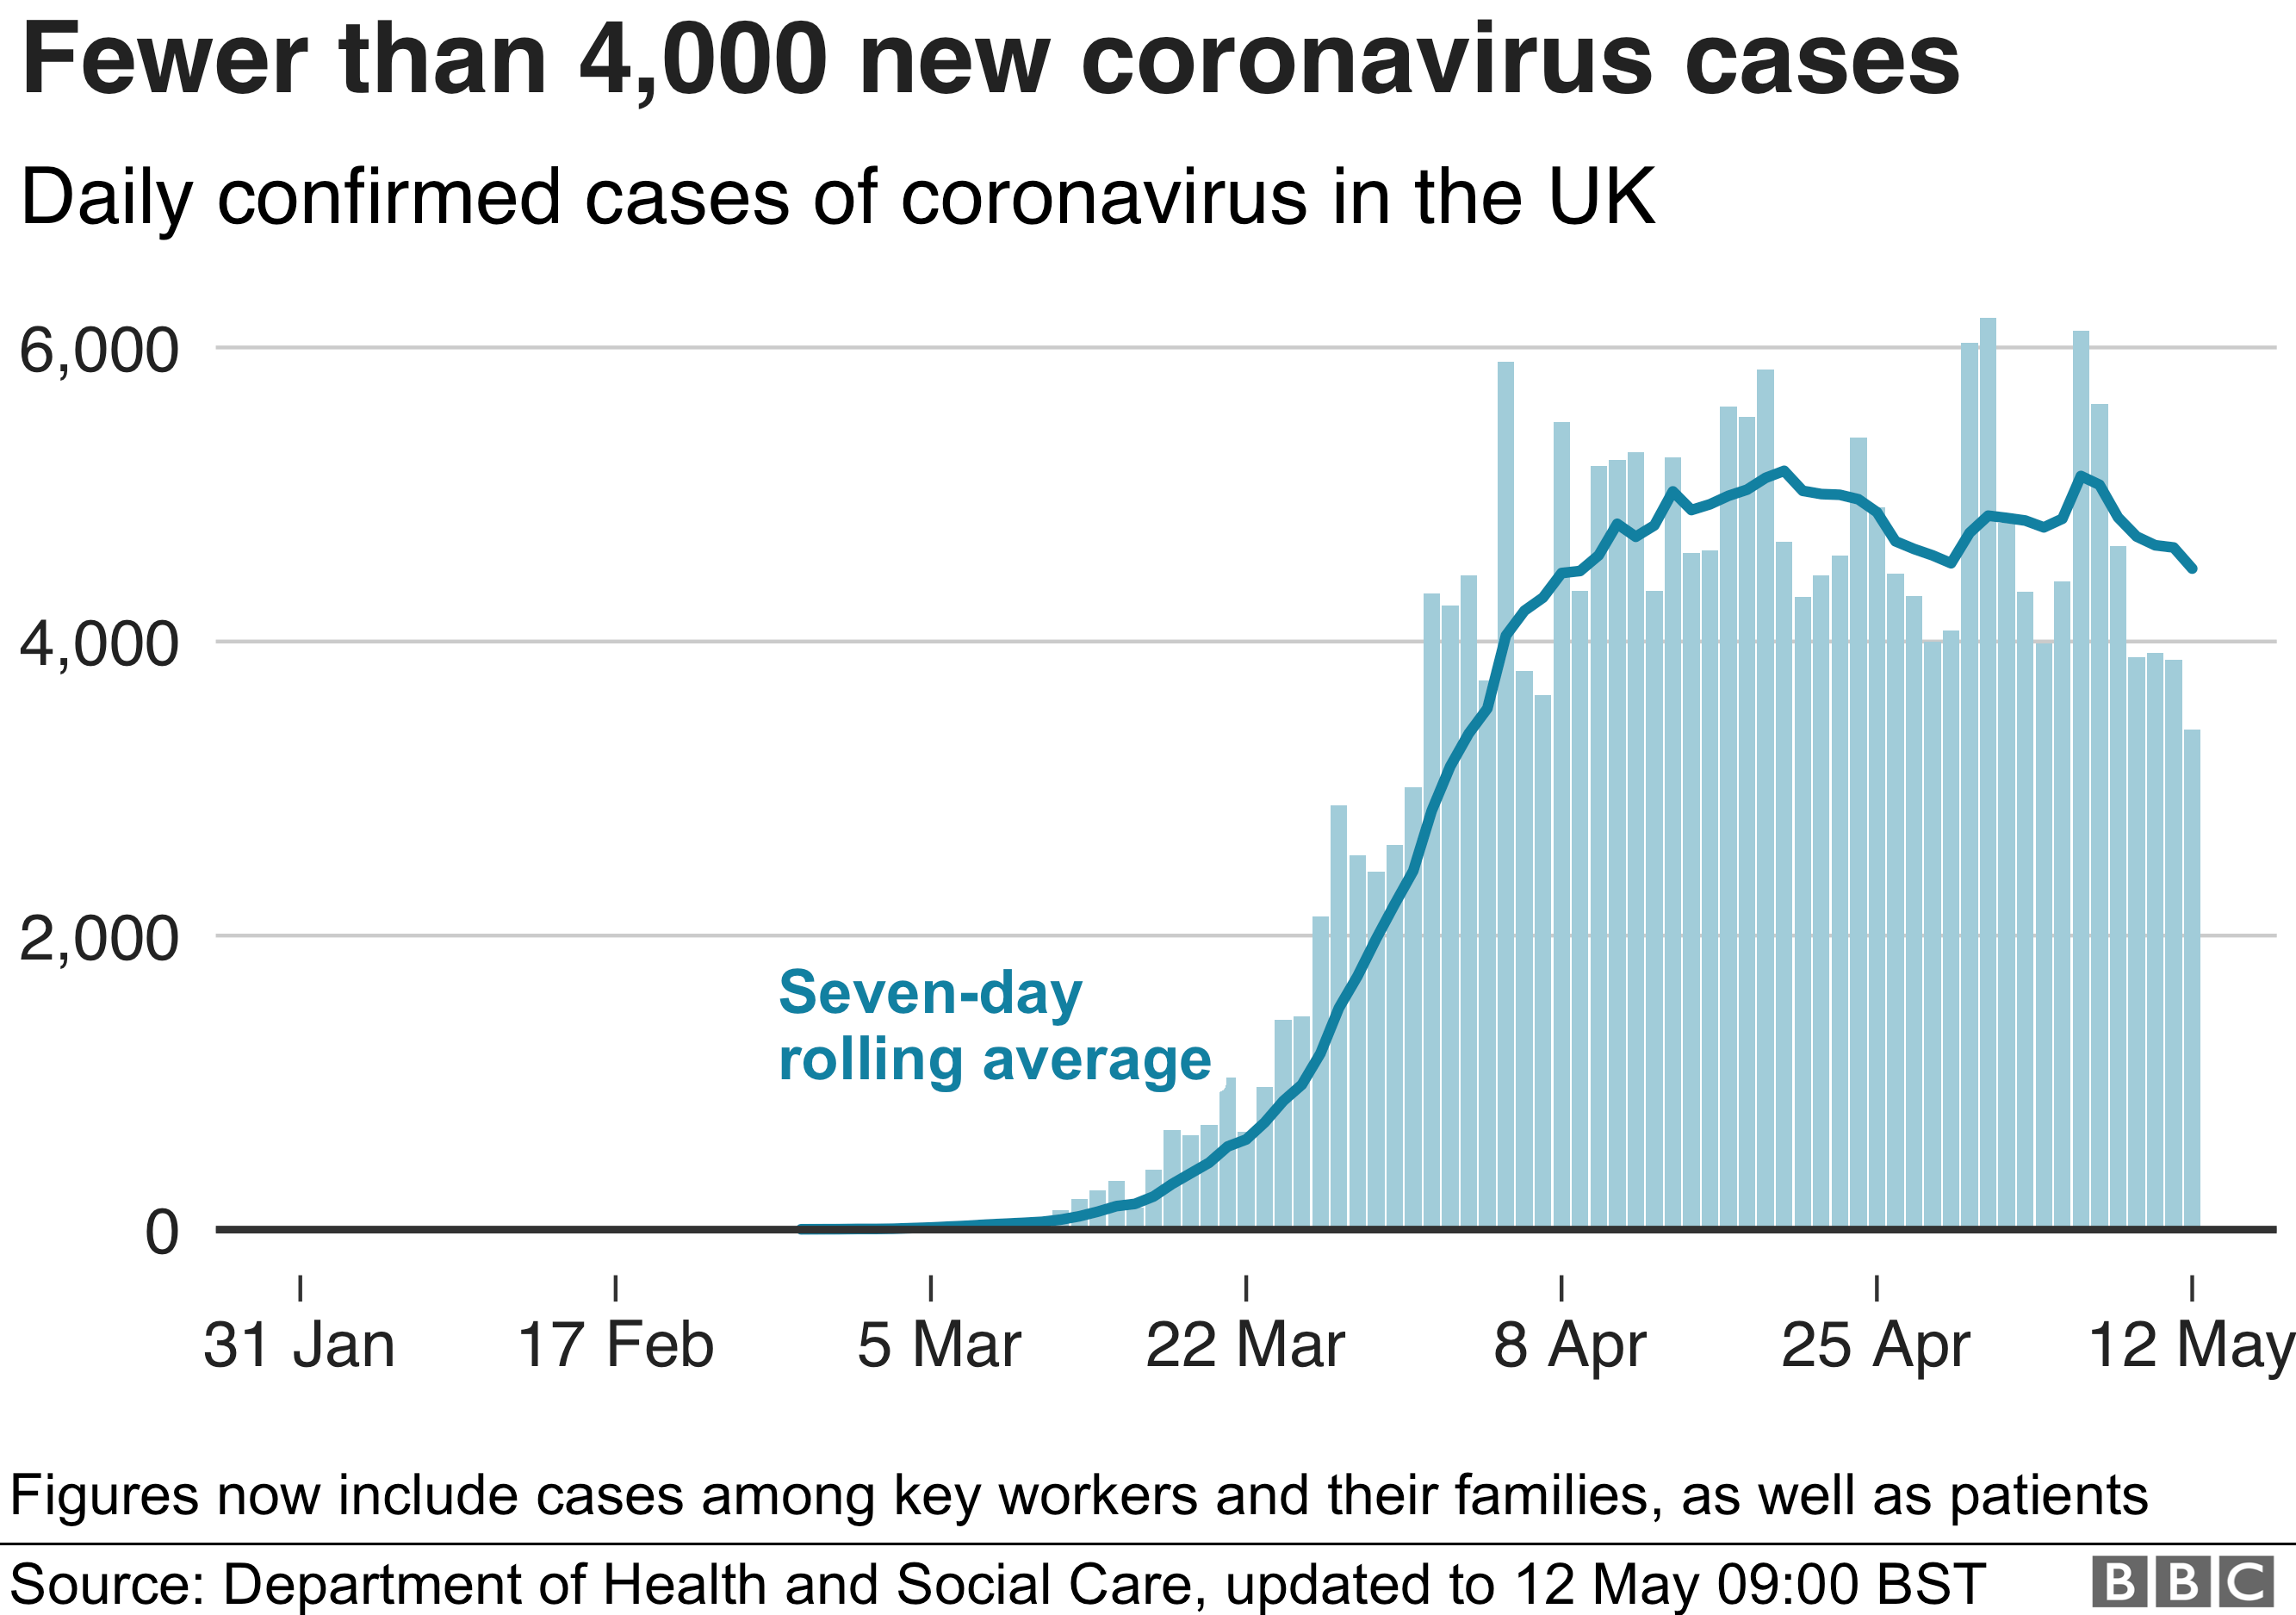 Fewer than 4000 new UK coronavirus cases per day - enlarge